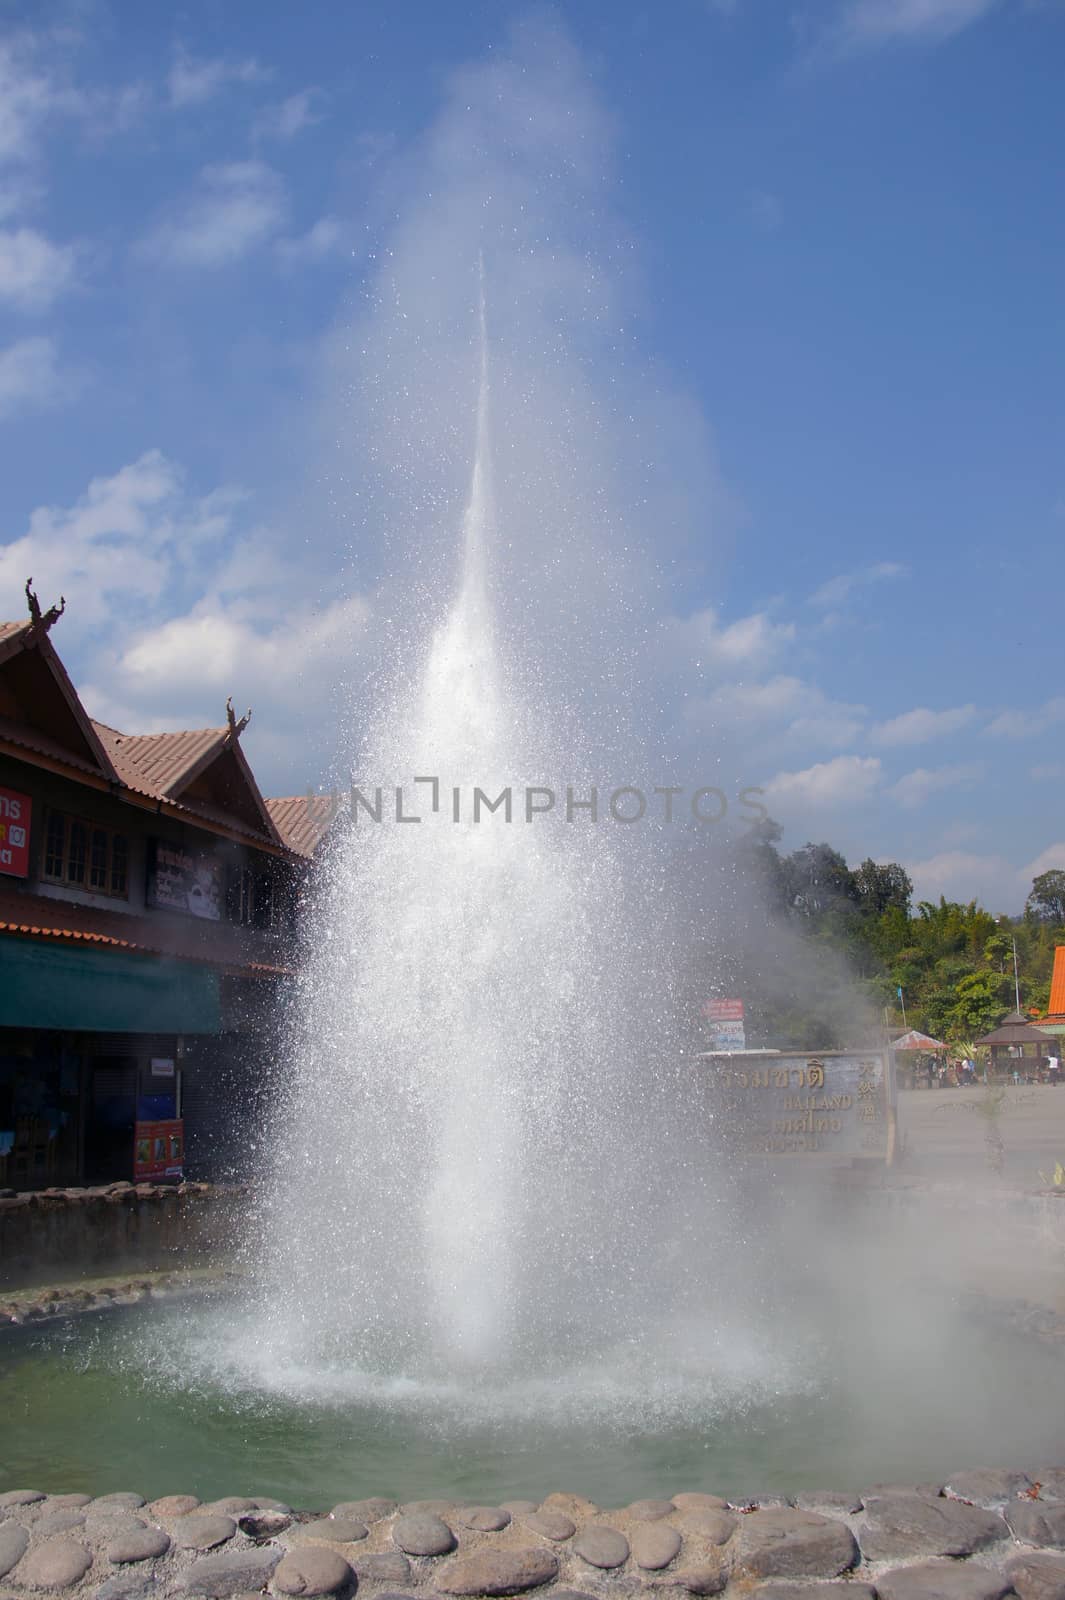 Hot fountain in Thailand.